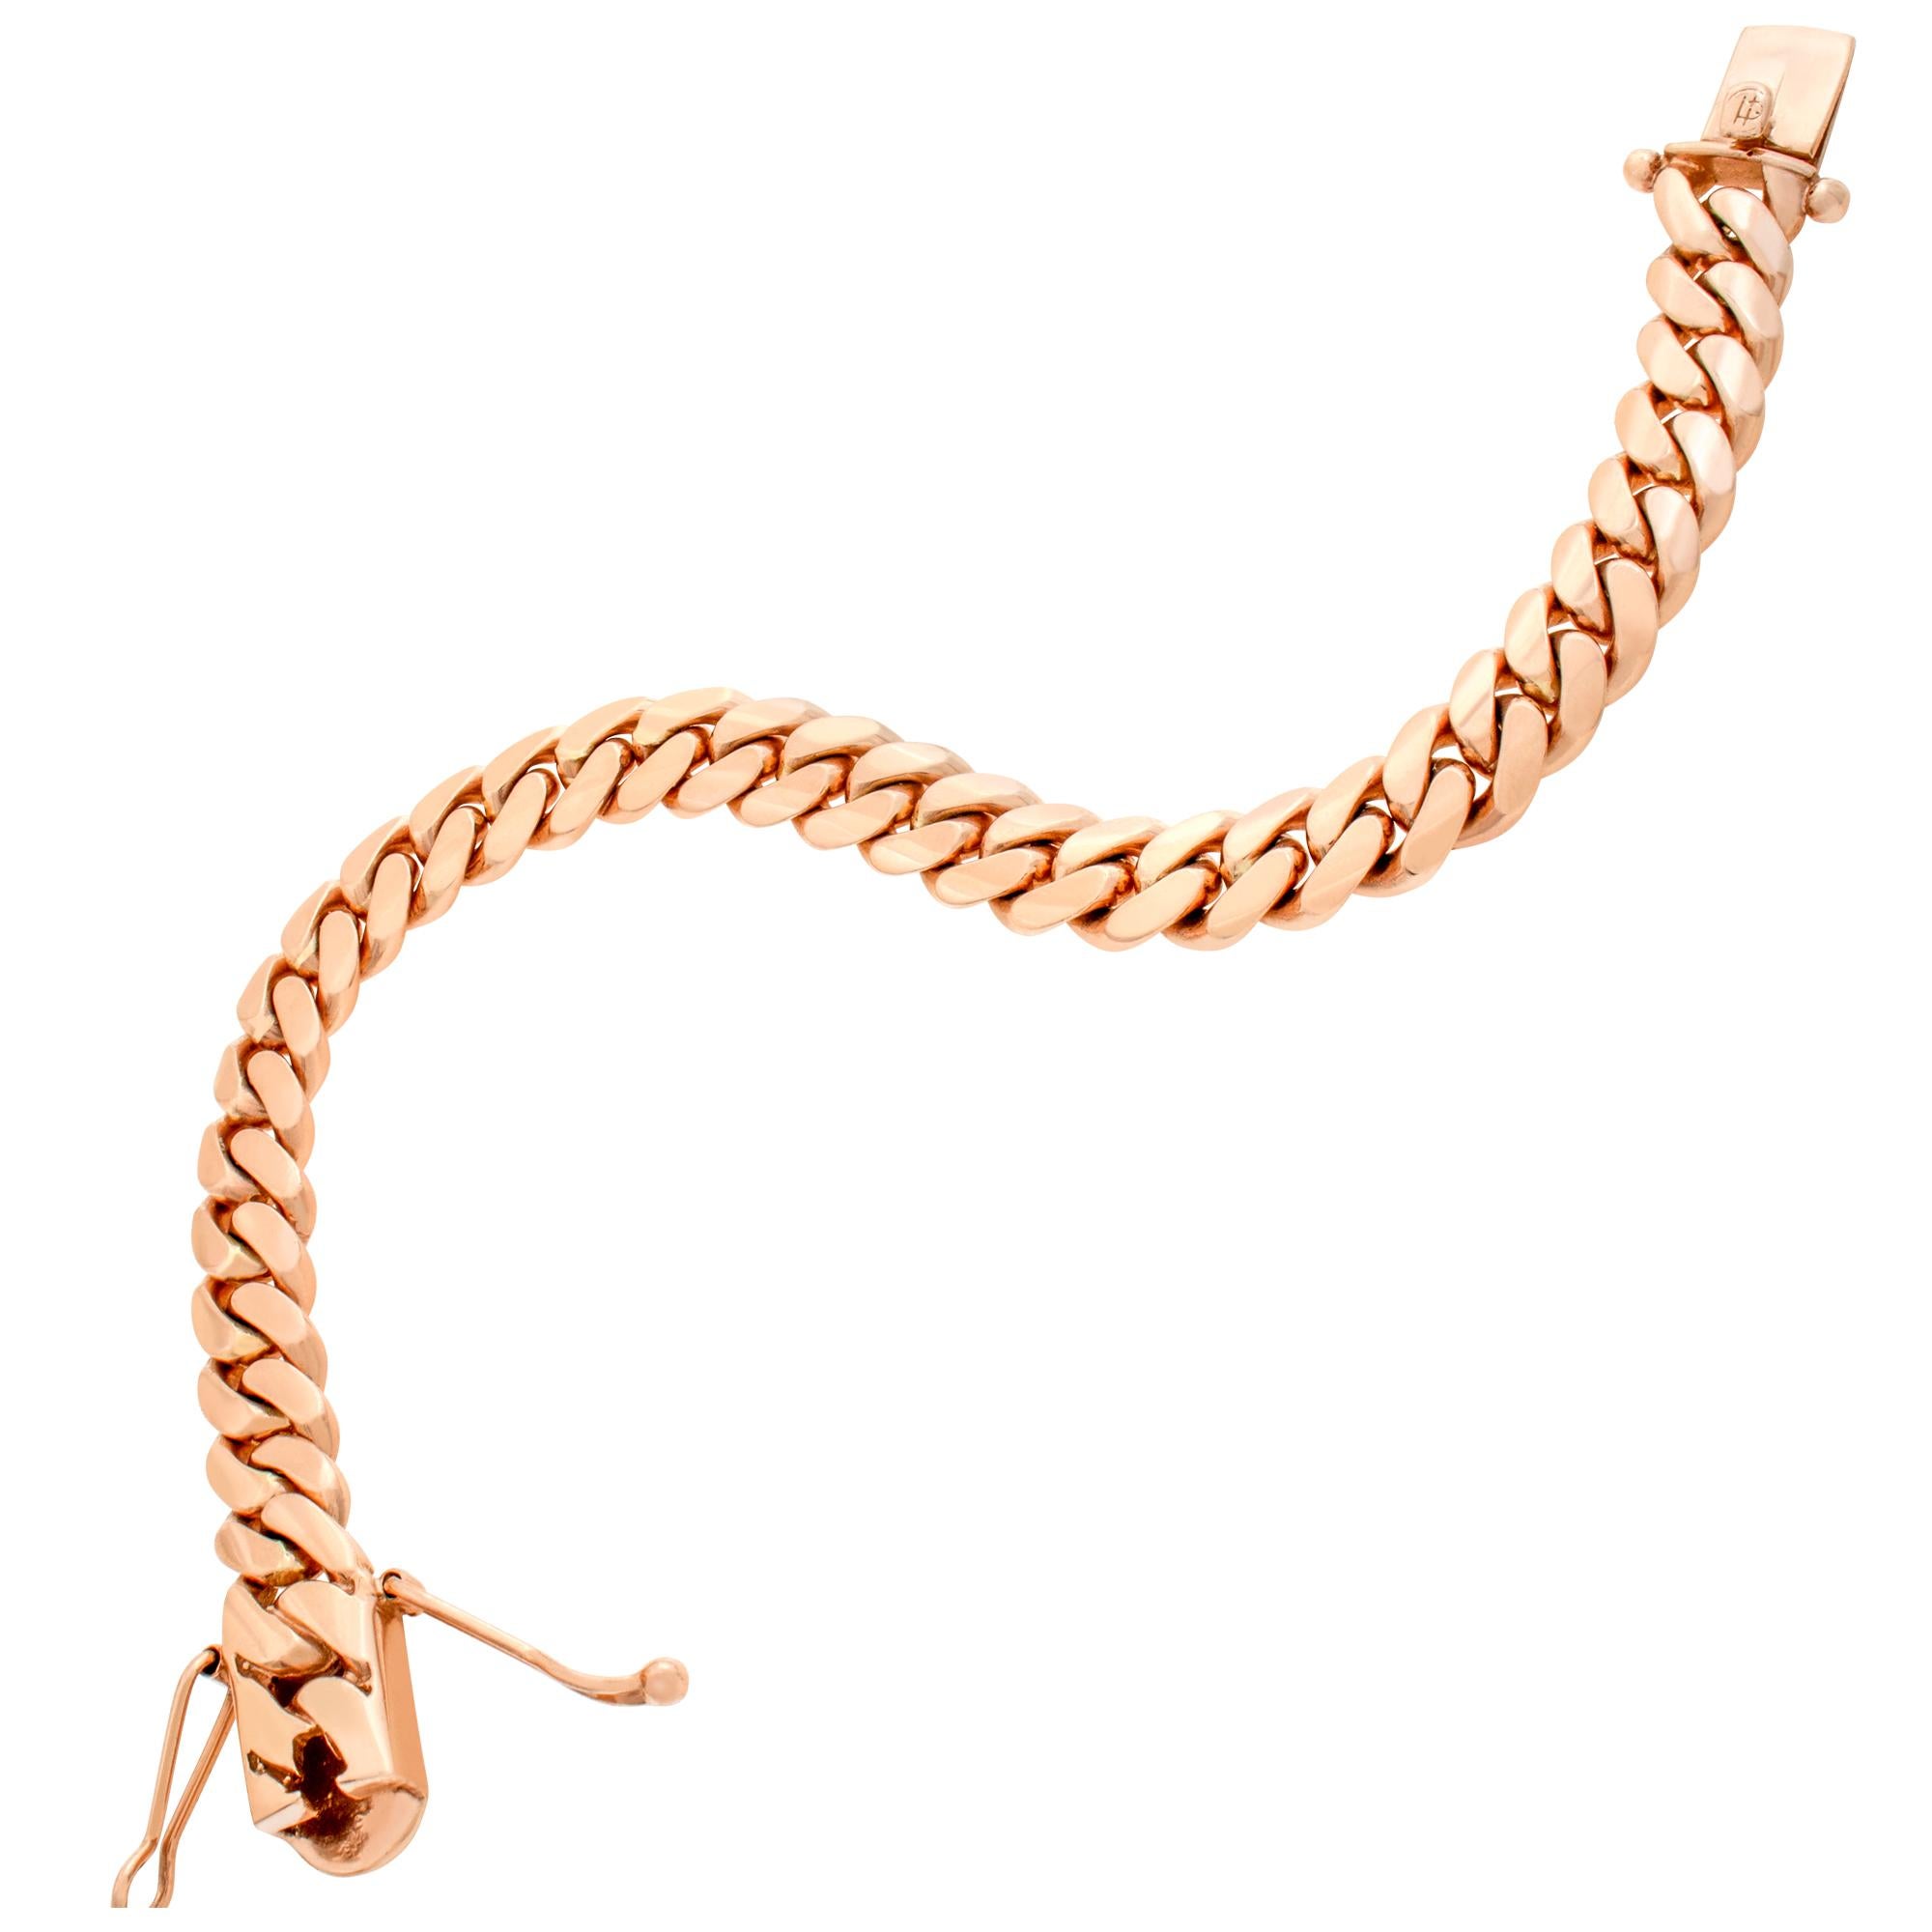 Mens 14k rose gold cuban link bracelet fits wrist up to 7.5 inches, width measures 9mm.
